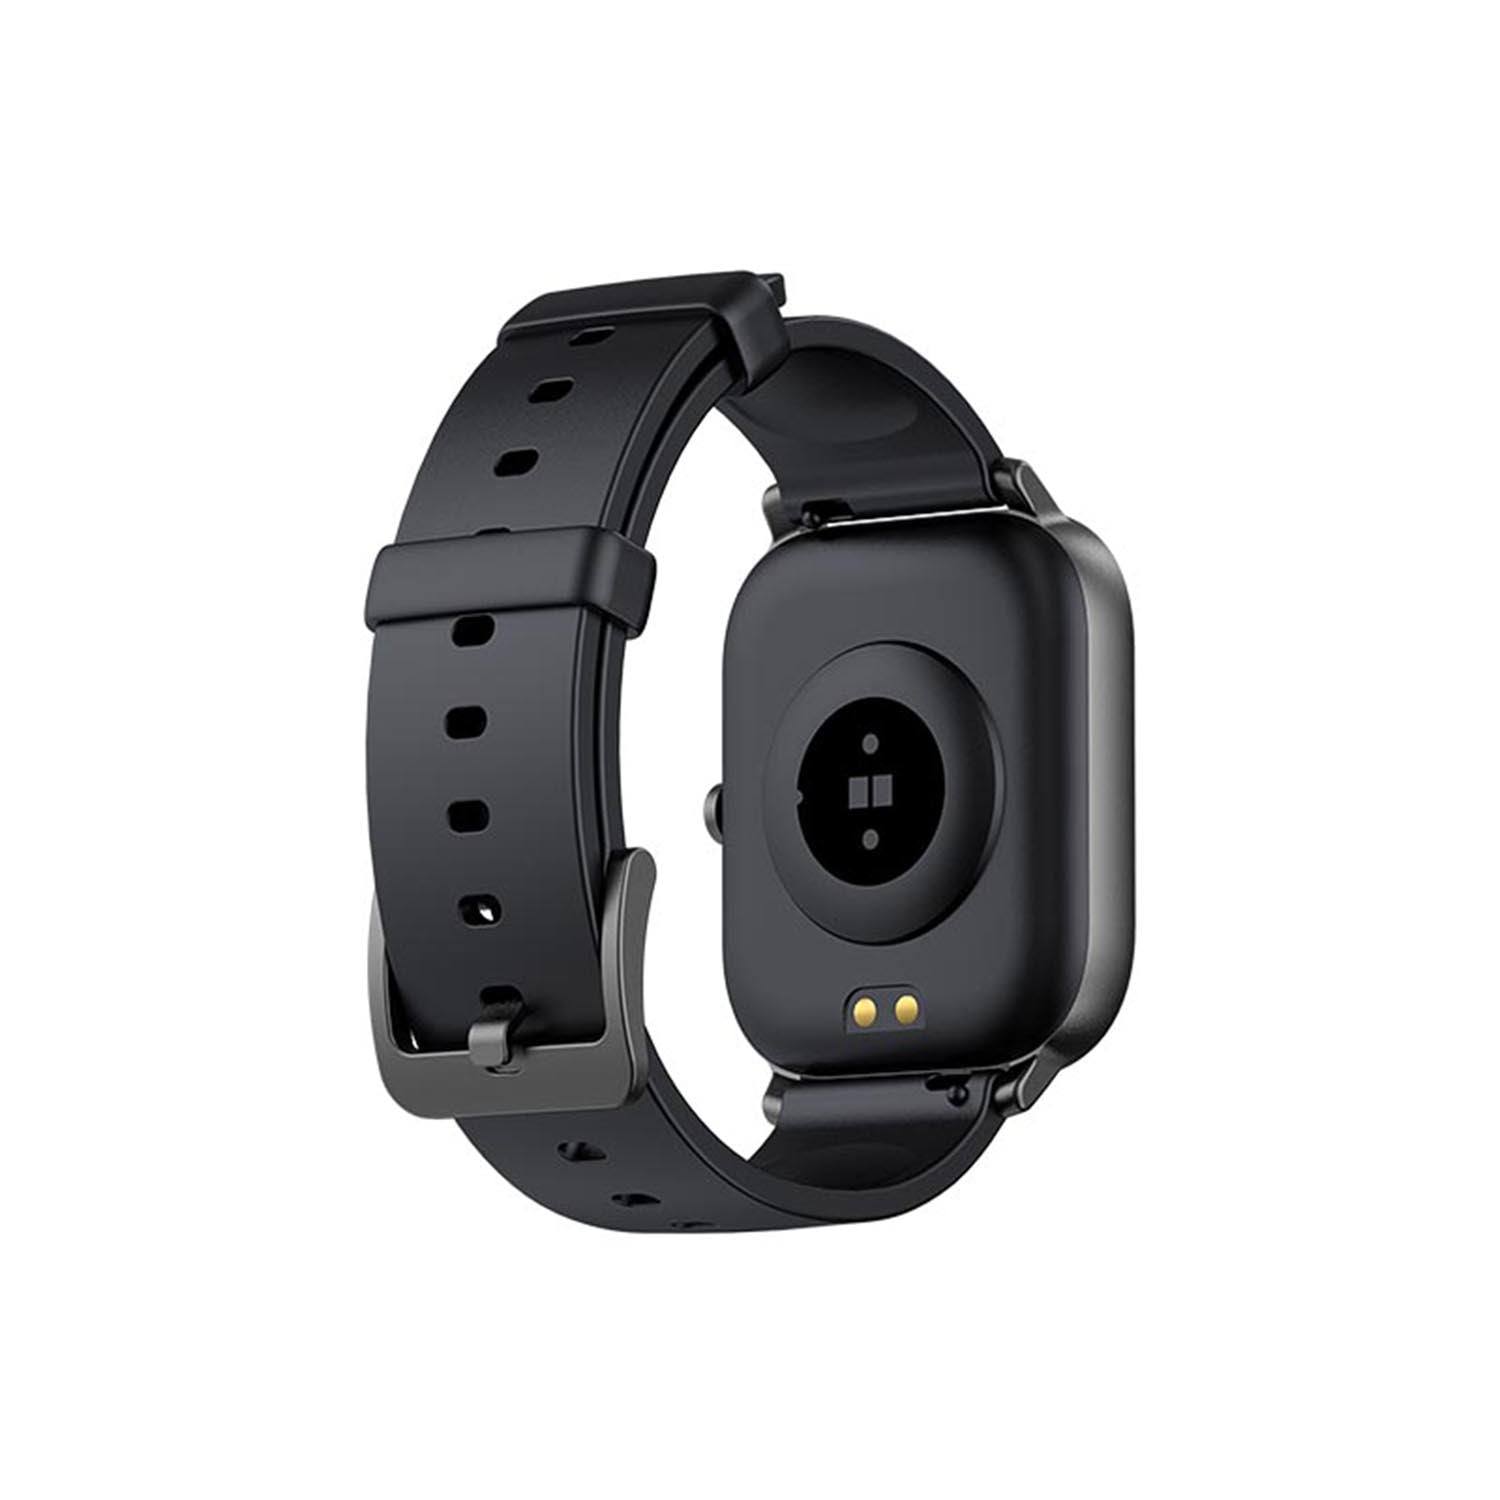 HAVIT M9006 PRO Full Touch Sports Smart Watch, Fitness Activity Tracker, Custom Dial